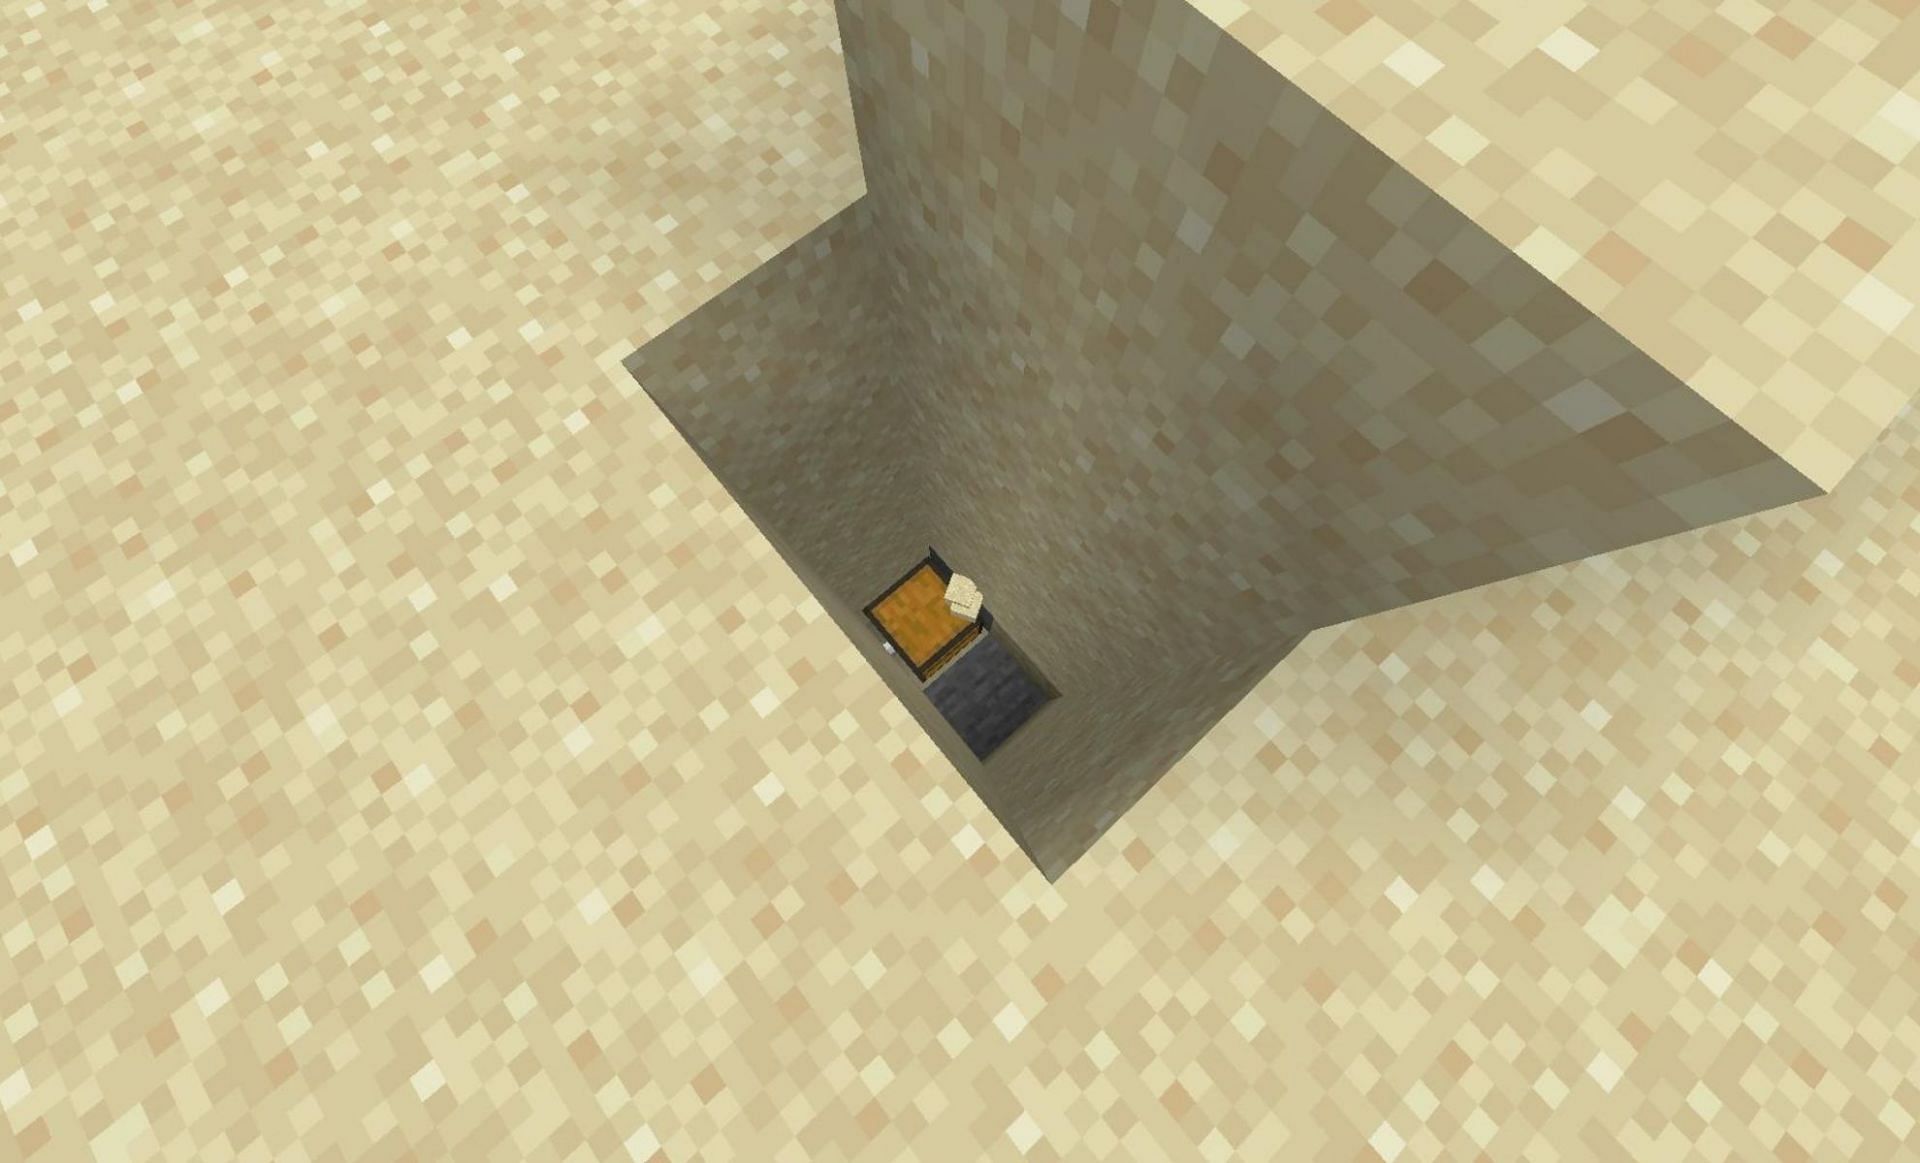 Buried treasure (Image via Minecraft Wiki)